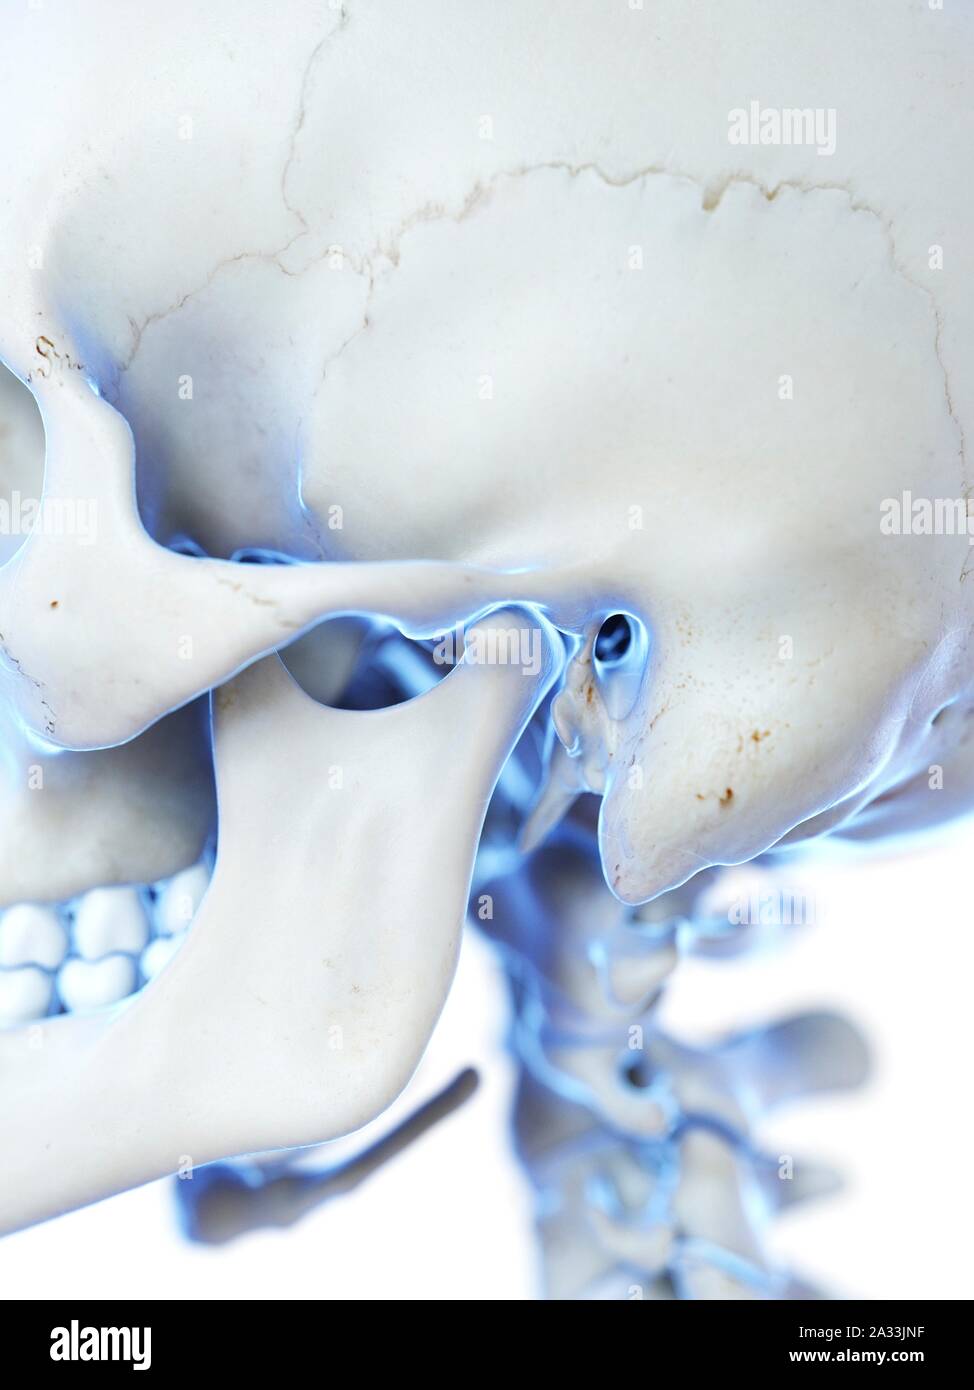 Temporomandibular joint, illustration Stock Photo